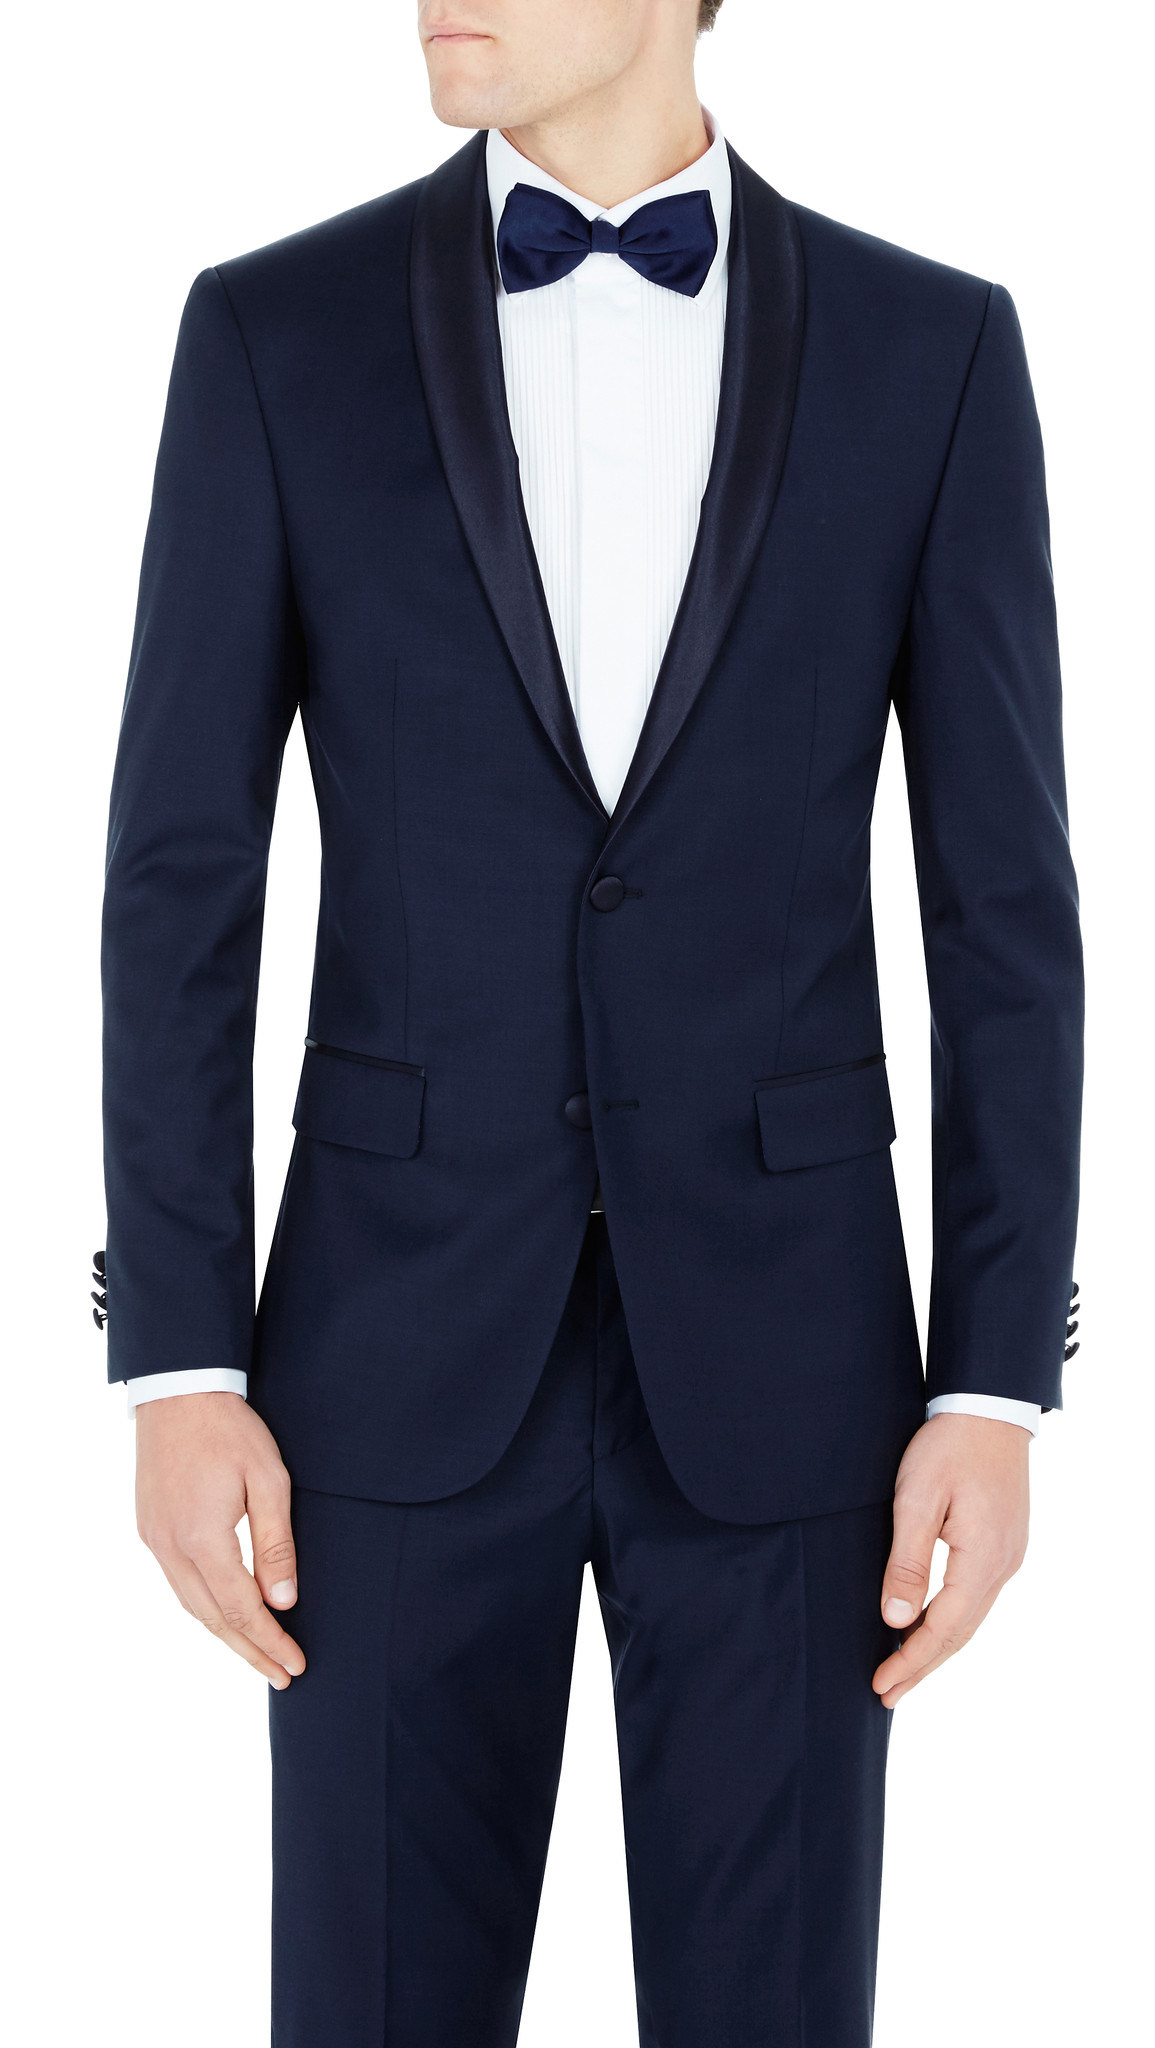 OEM Wholesales Two Piece Dinner Suit in Blue